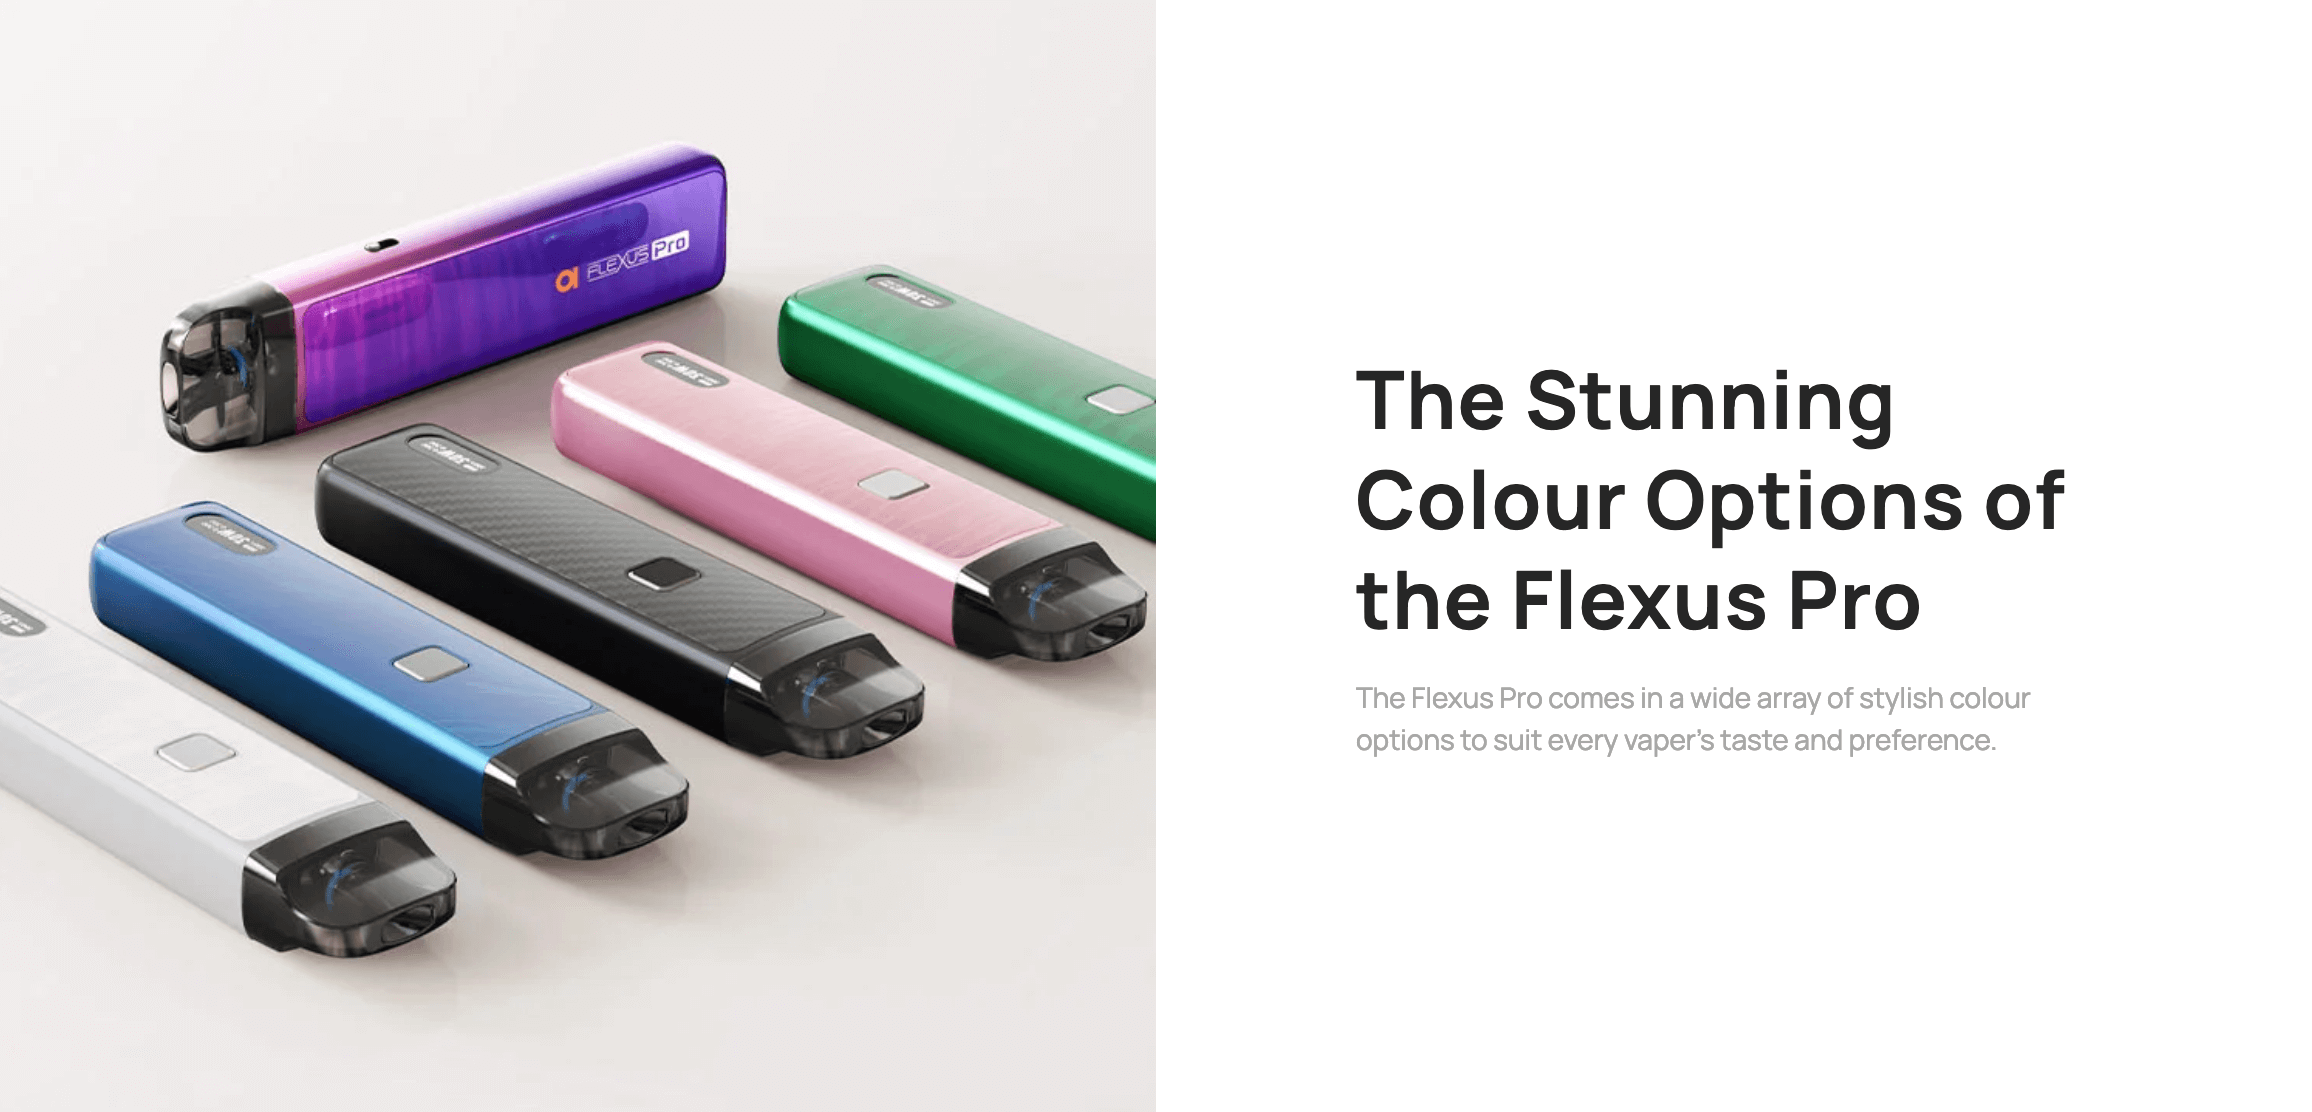 Aspire Flexus Pro Kit - Colour Options; Black, Fade Blue, Pearl White, Green, Pink, Fuchsia